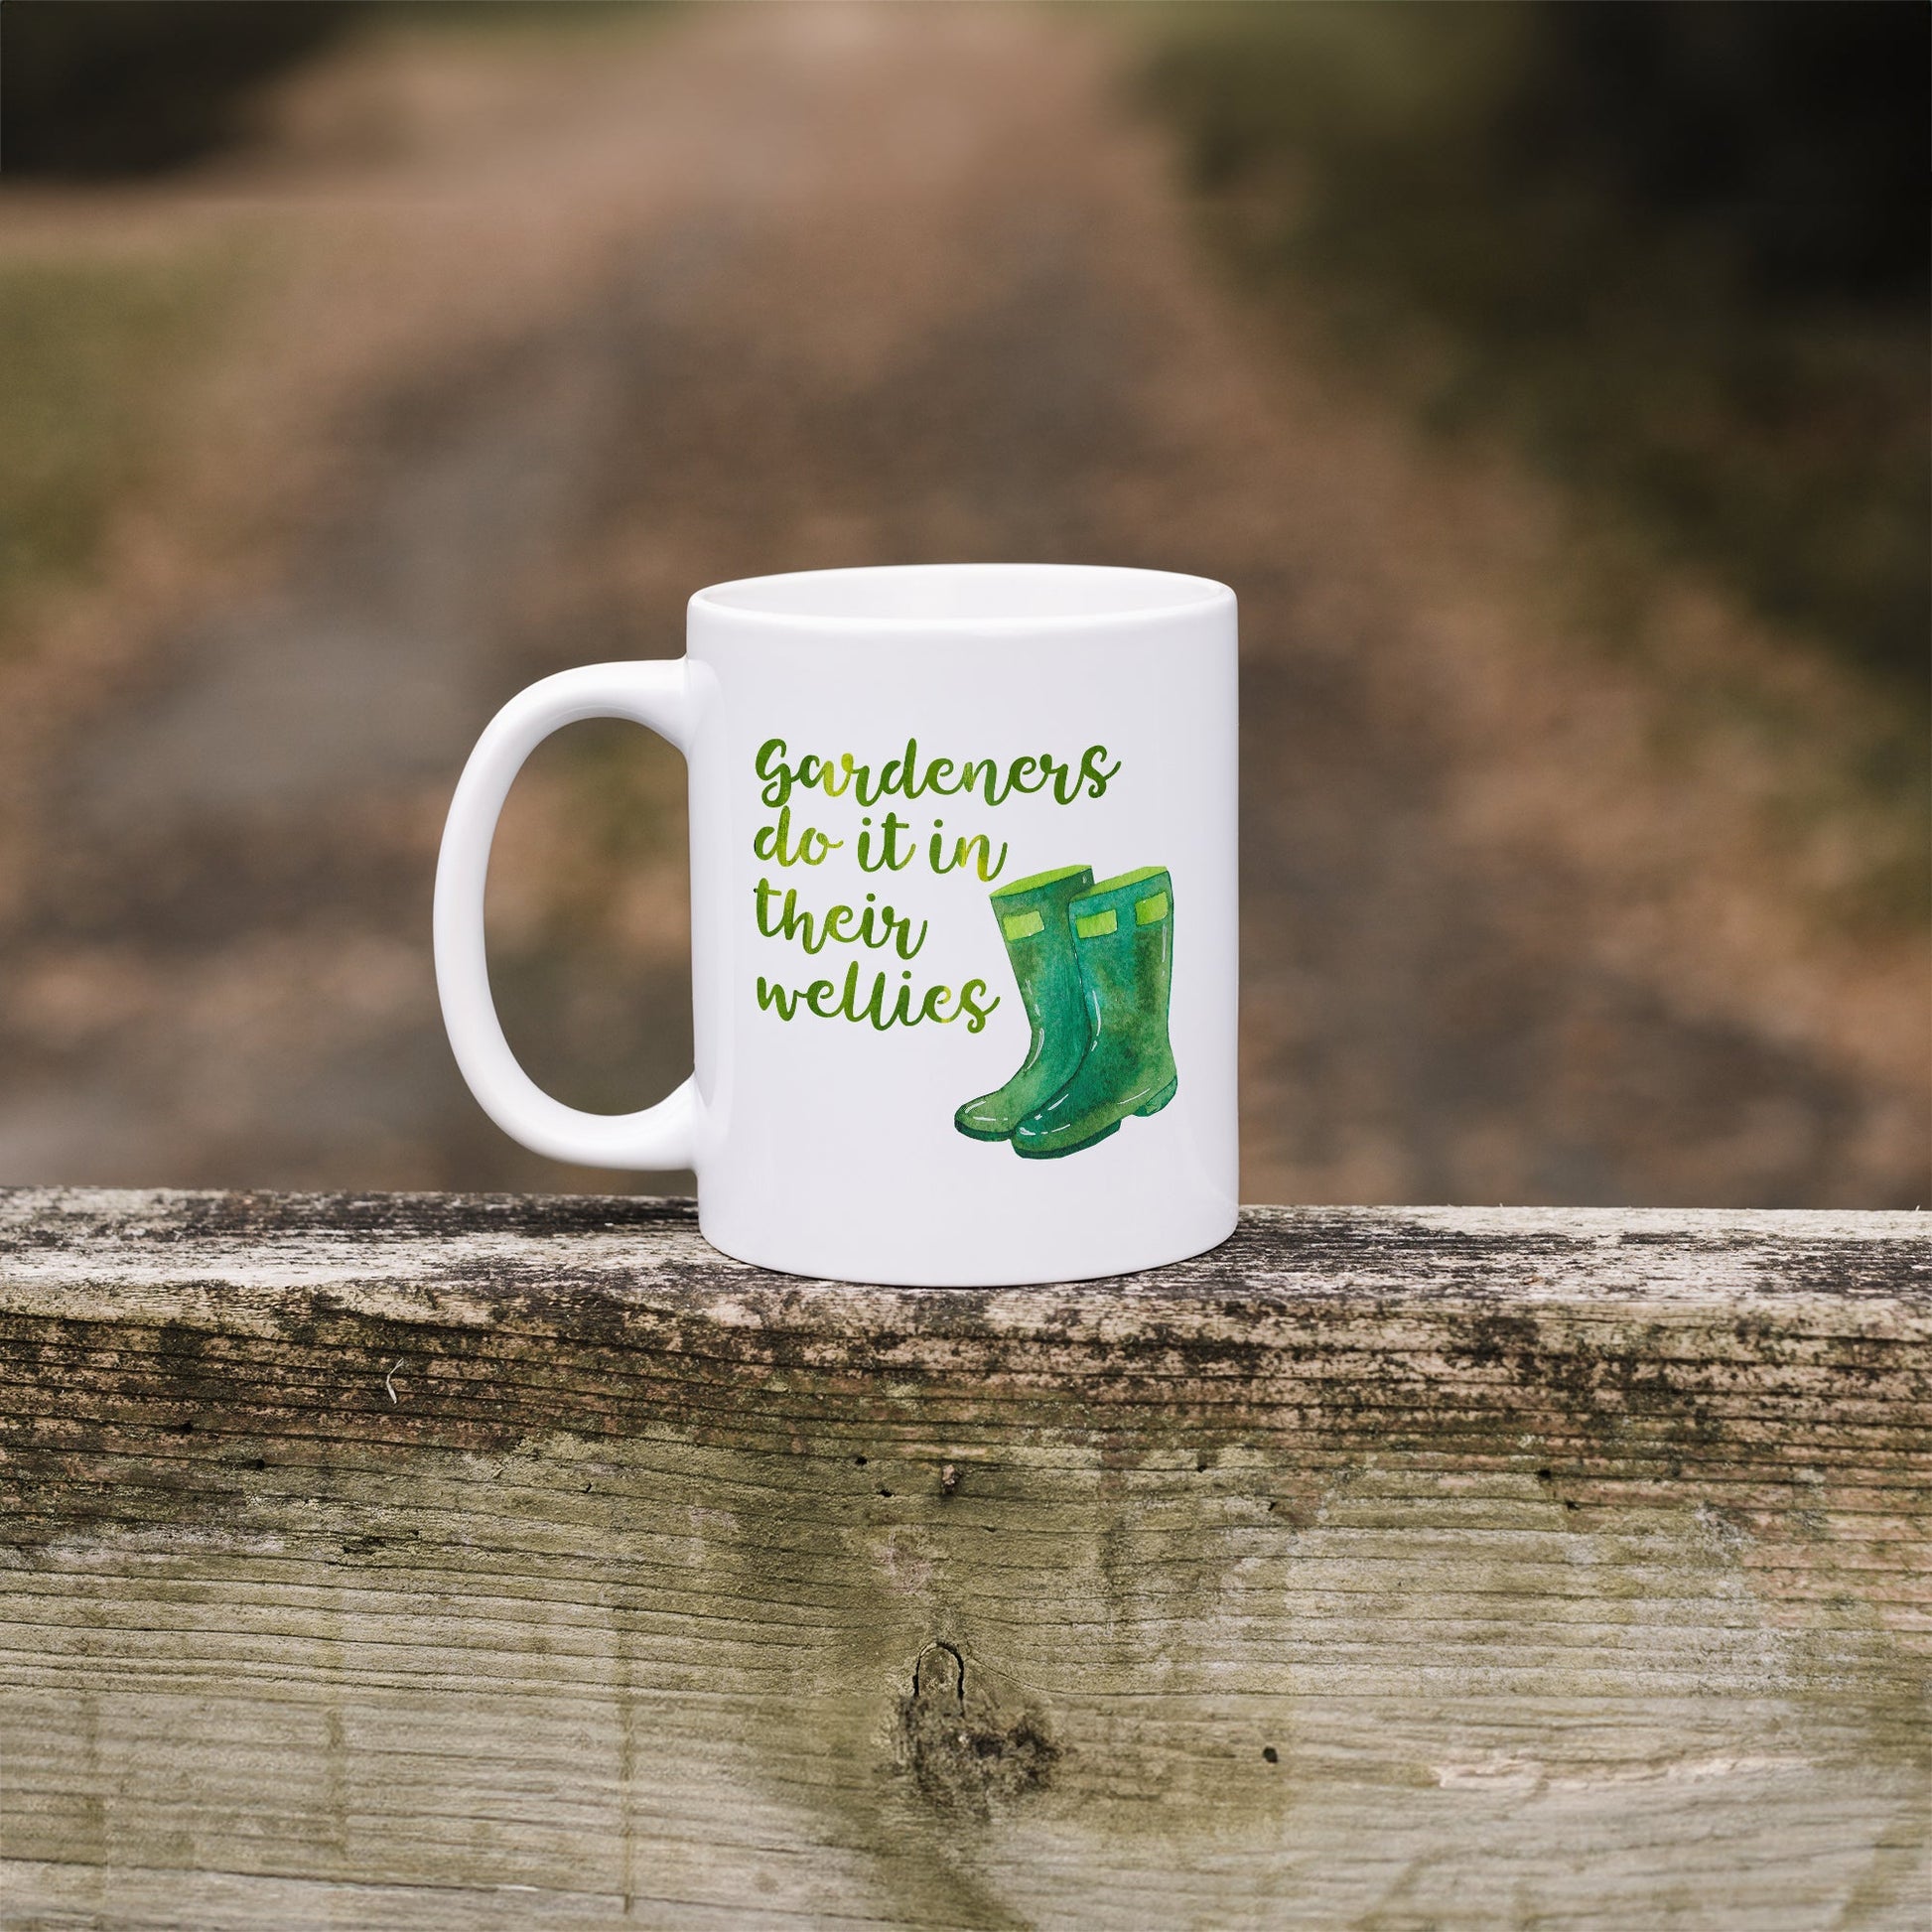 Gardeners do it in their wellies | Ceramic mug-Ceramic mug-Adnil Creations